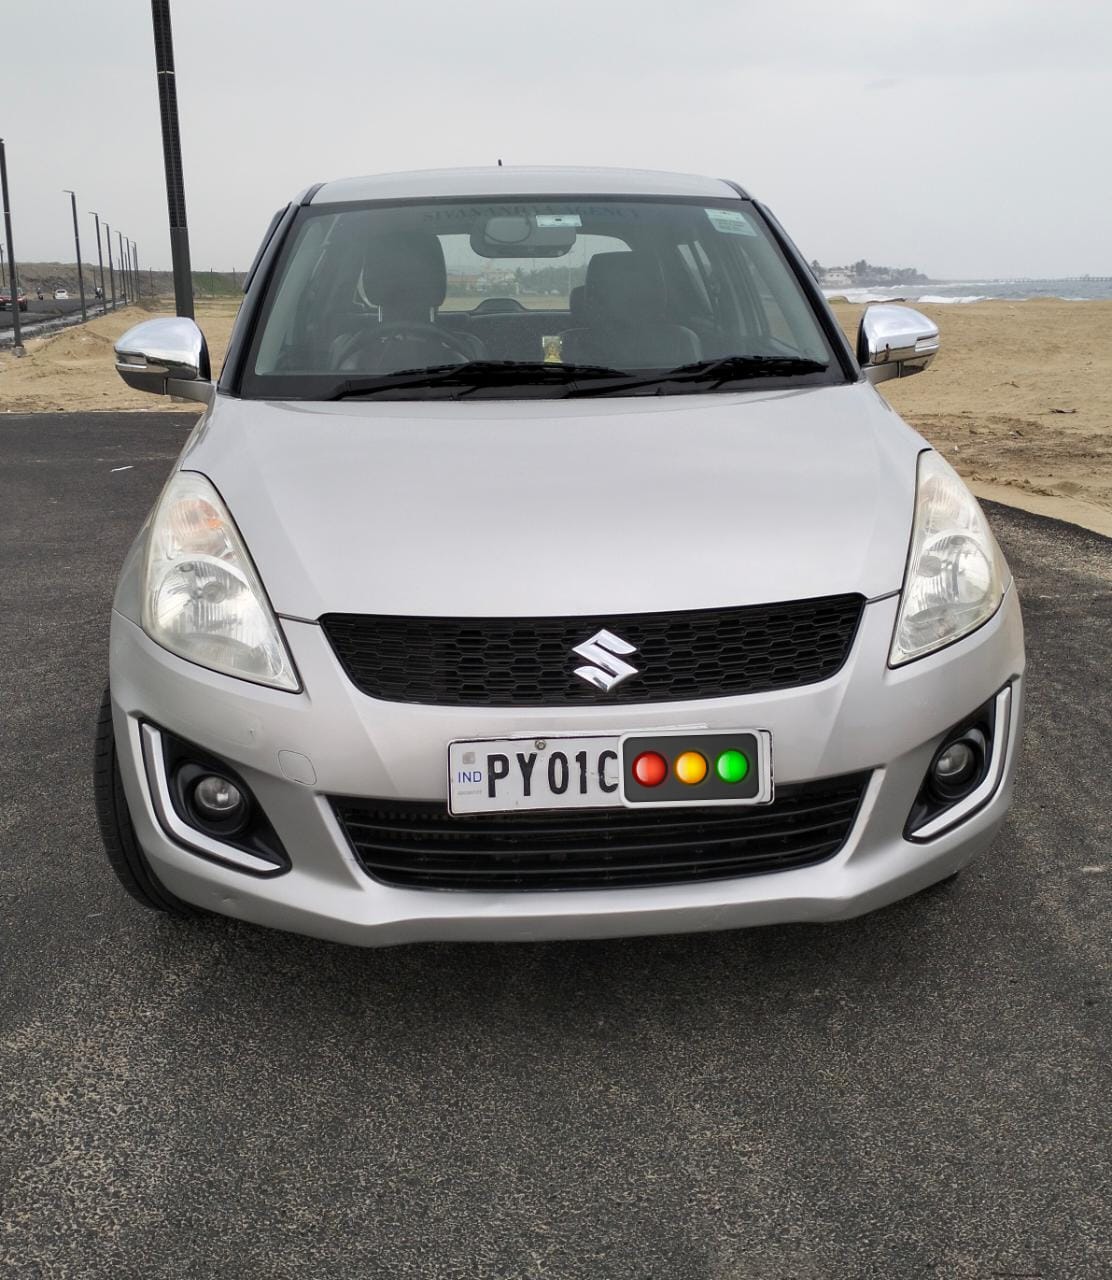 4809-for-sale-Maruthi-Suzuki-Swift-Diesel-Second-Owner-2015-PY-registered-rs-465000